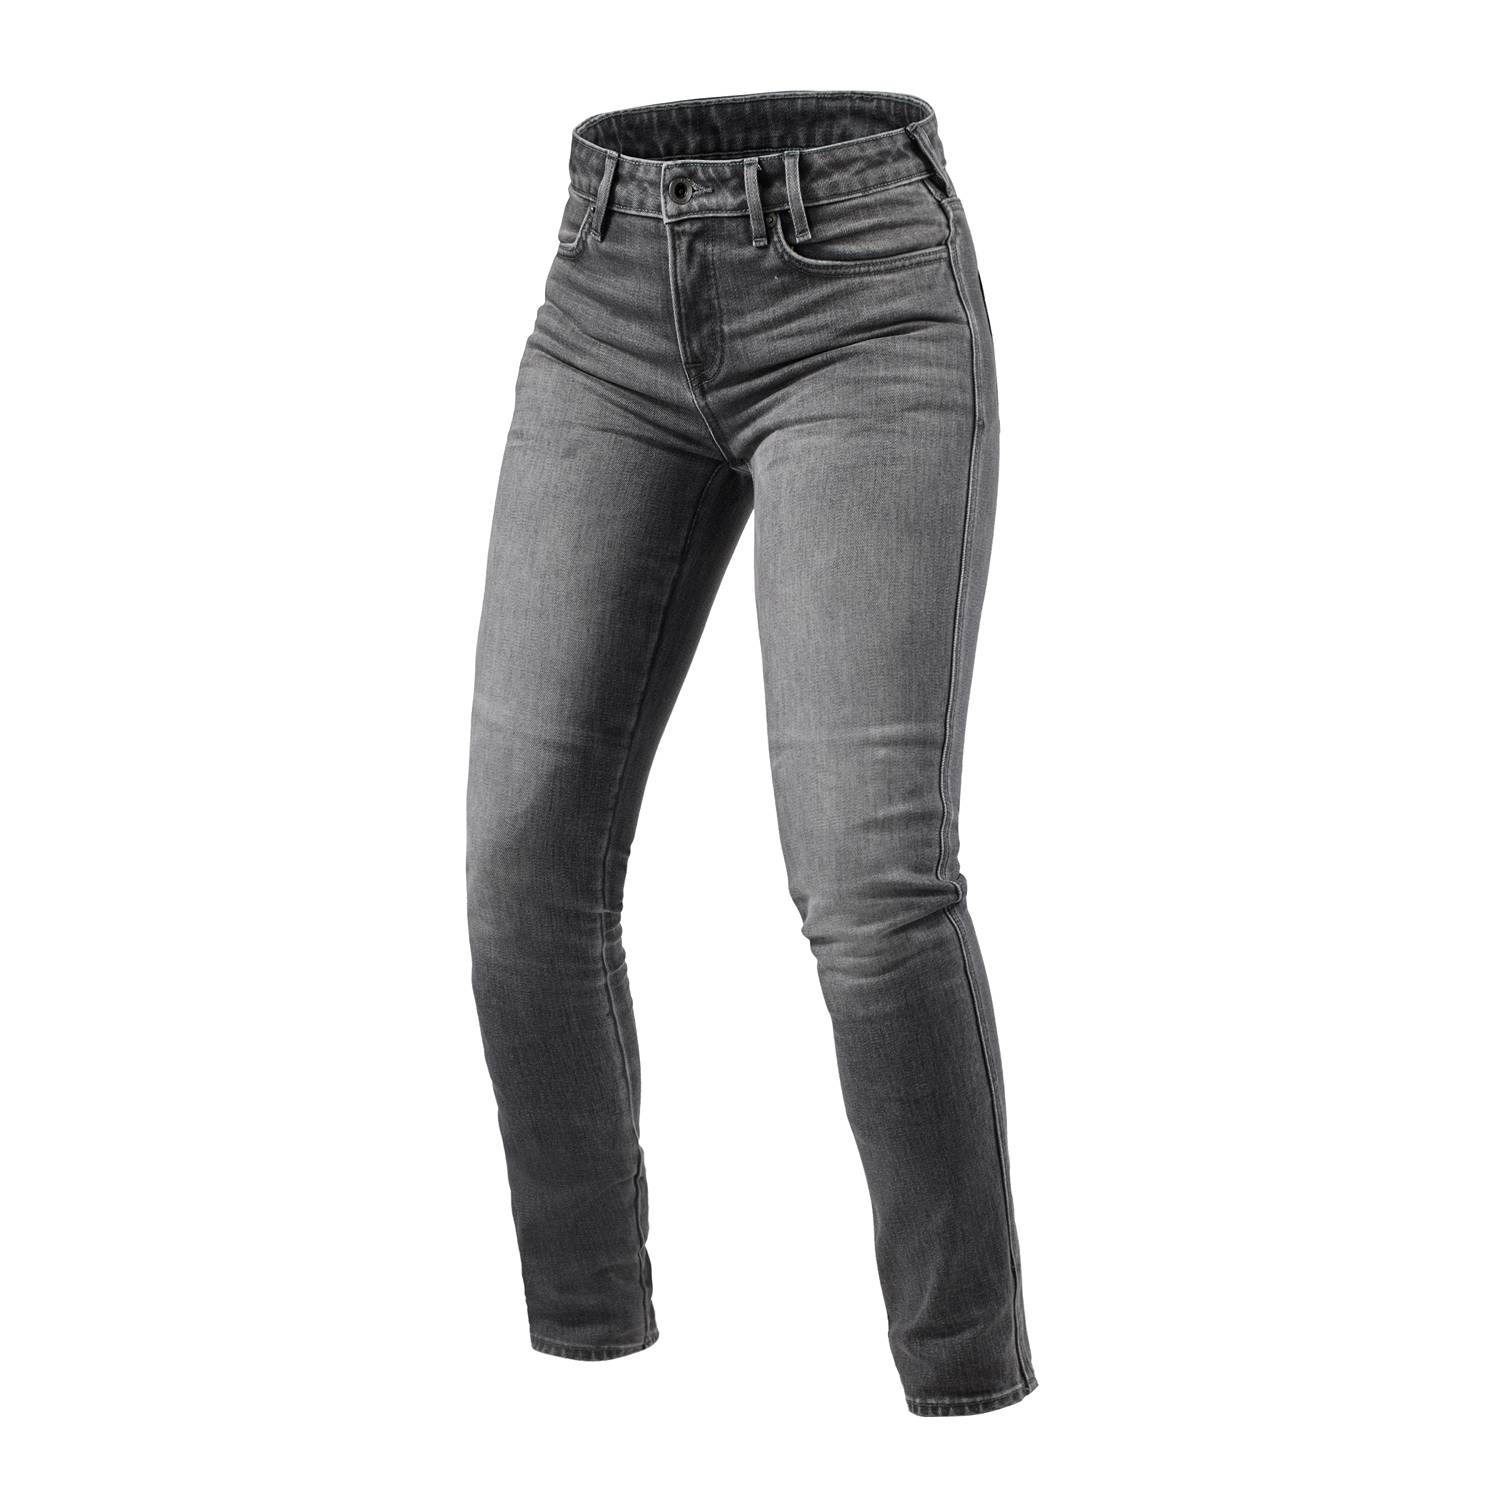 Image of REV'IT! Jeans Shelby 2 Ladies SK Medium Grey Stone L32 Size L32/W27 EN